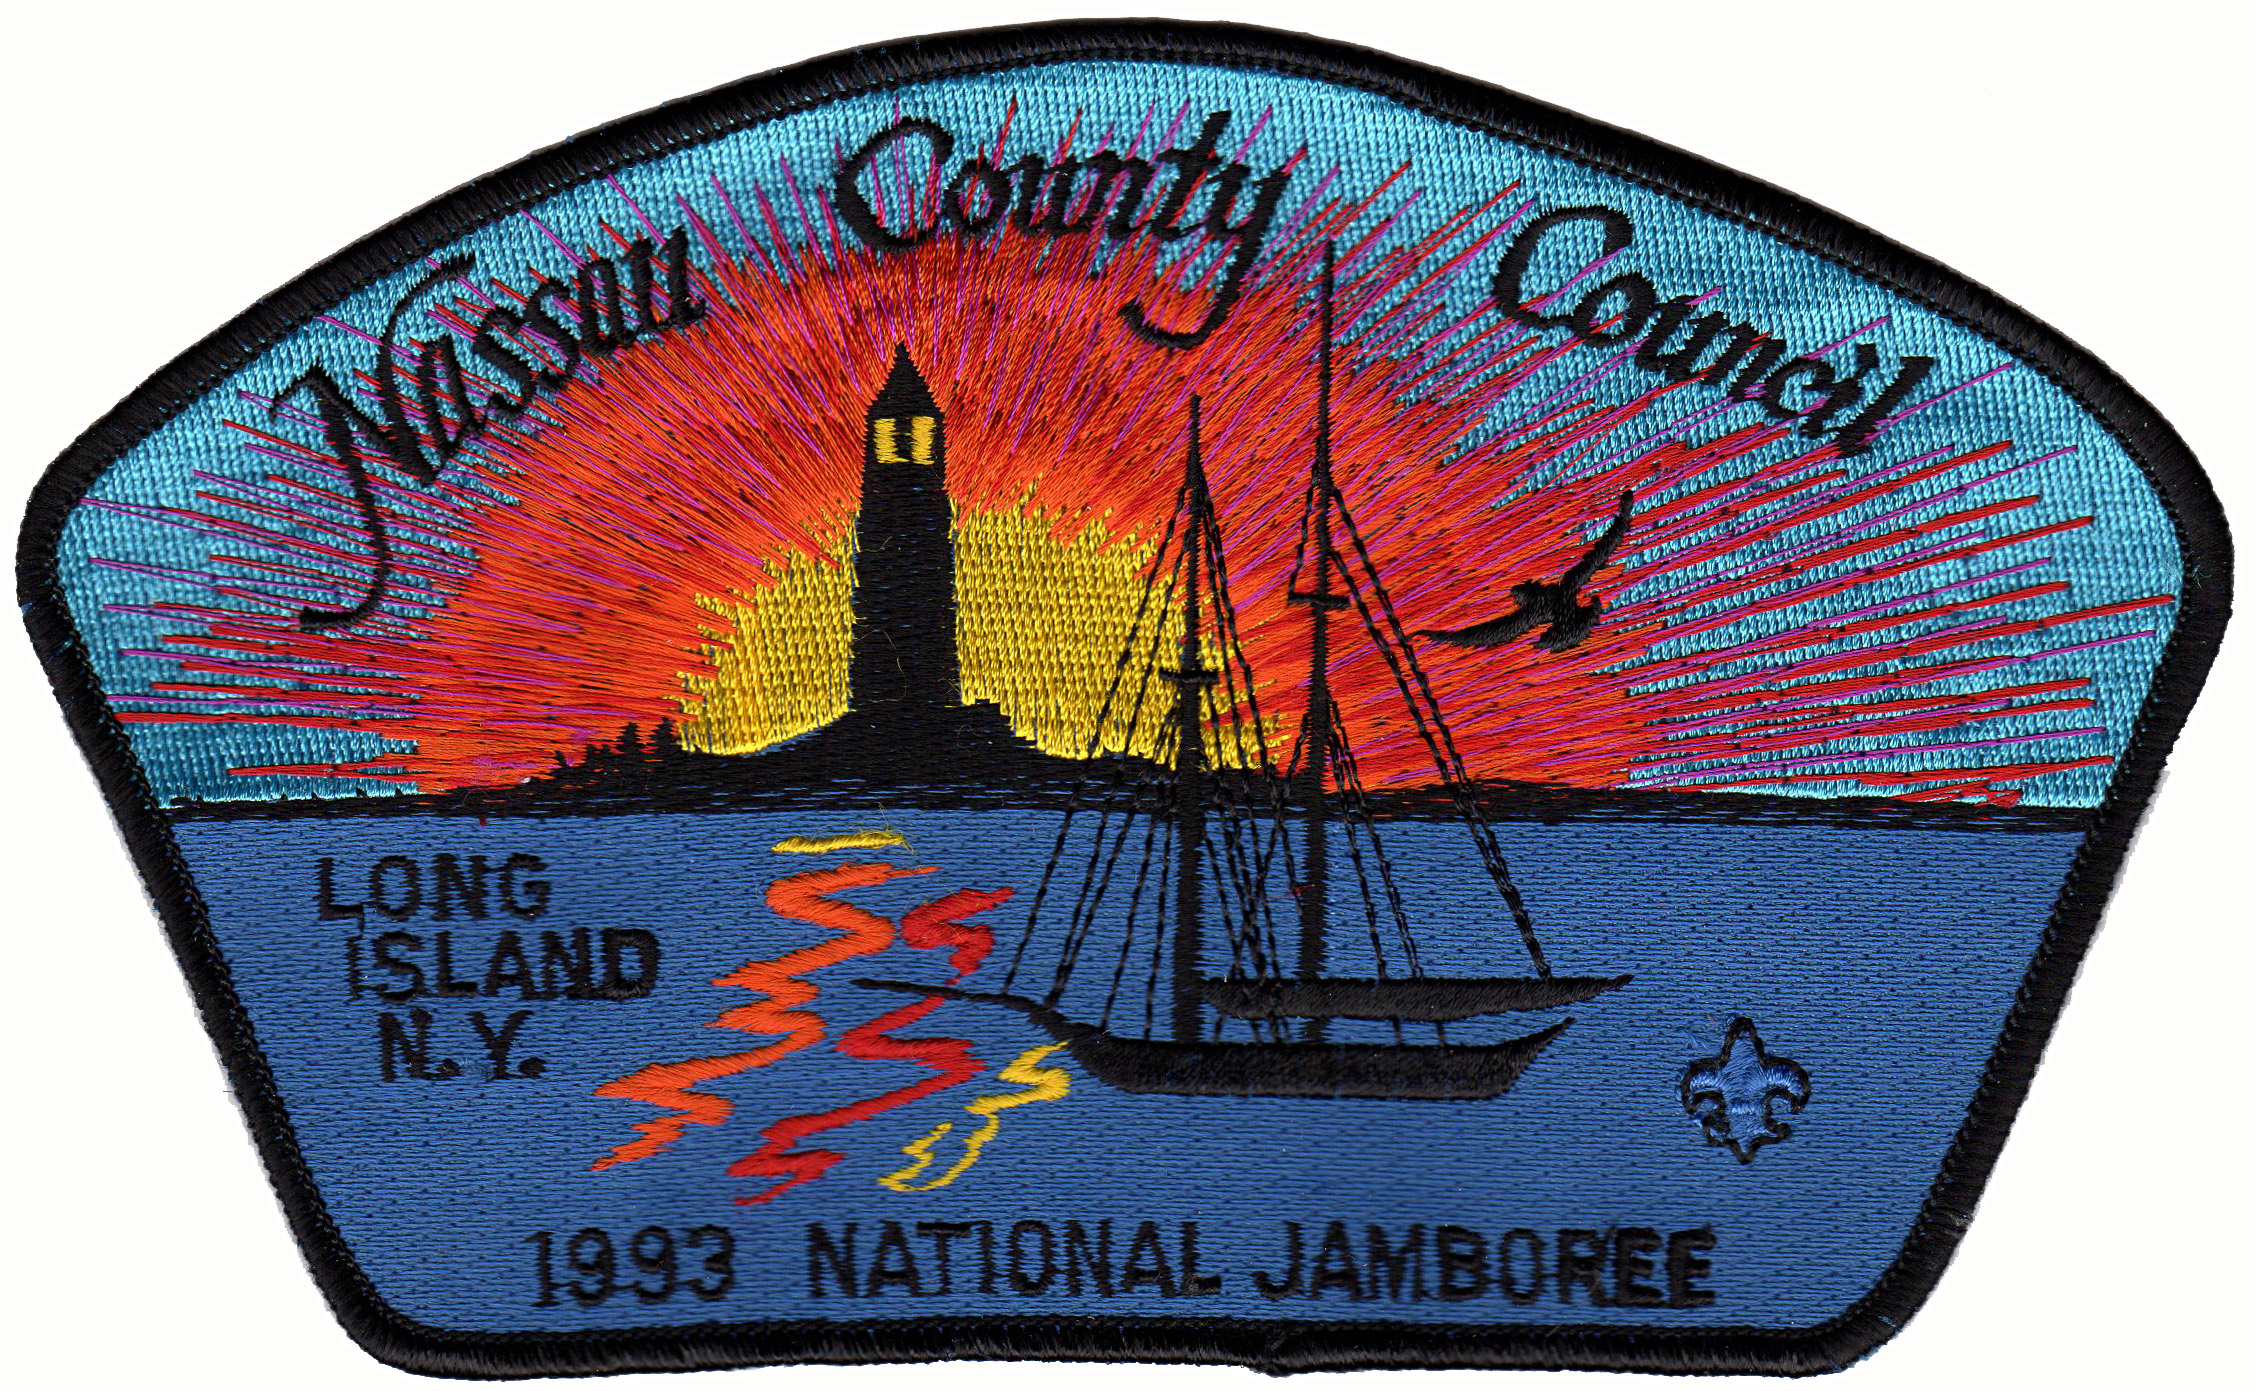 1993 National Jamboree Jacket Patch